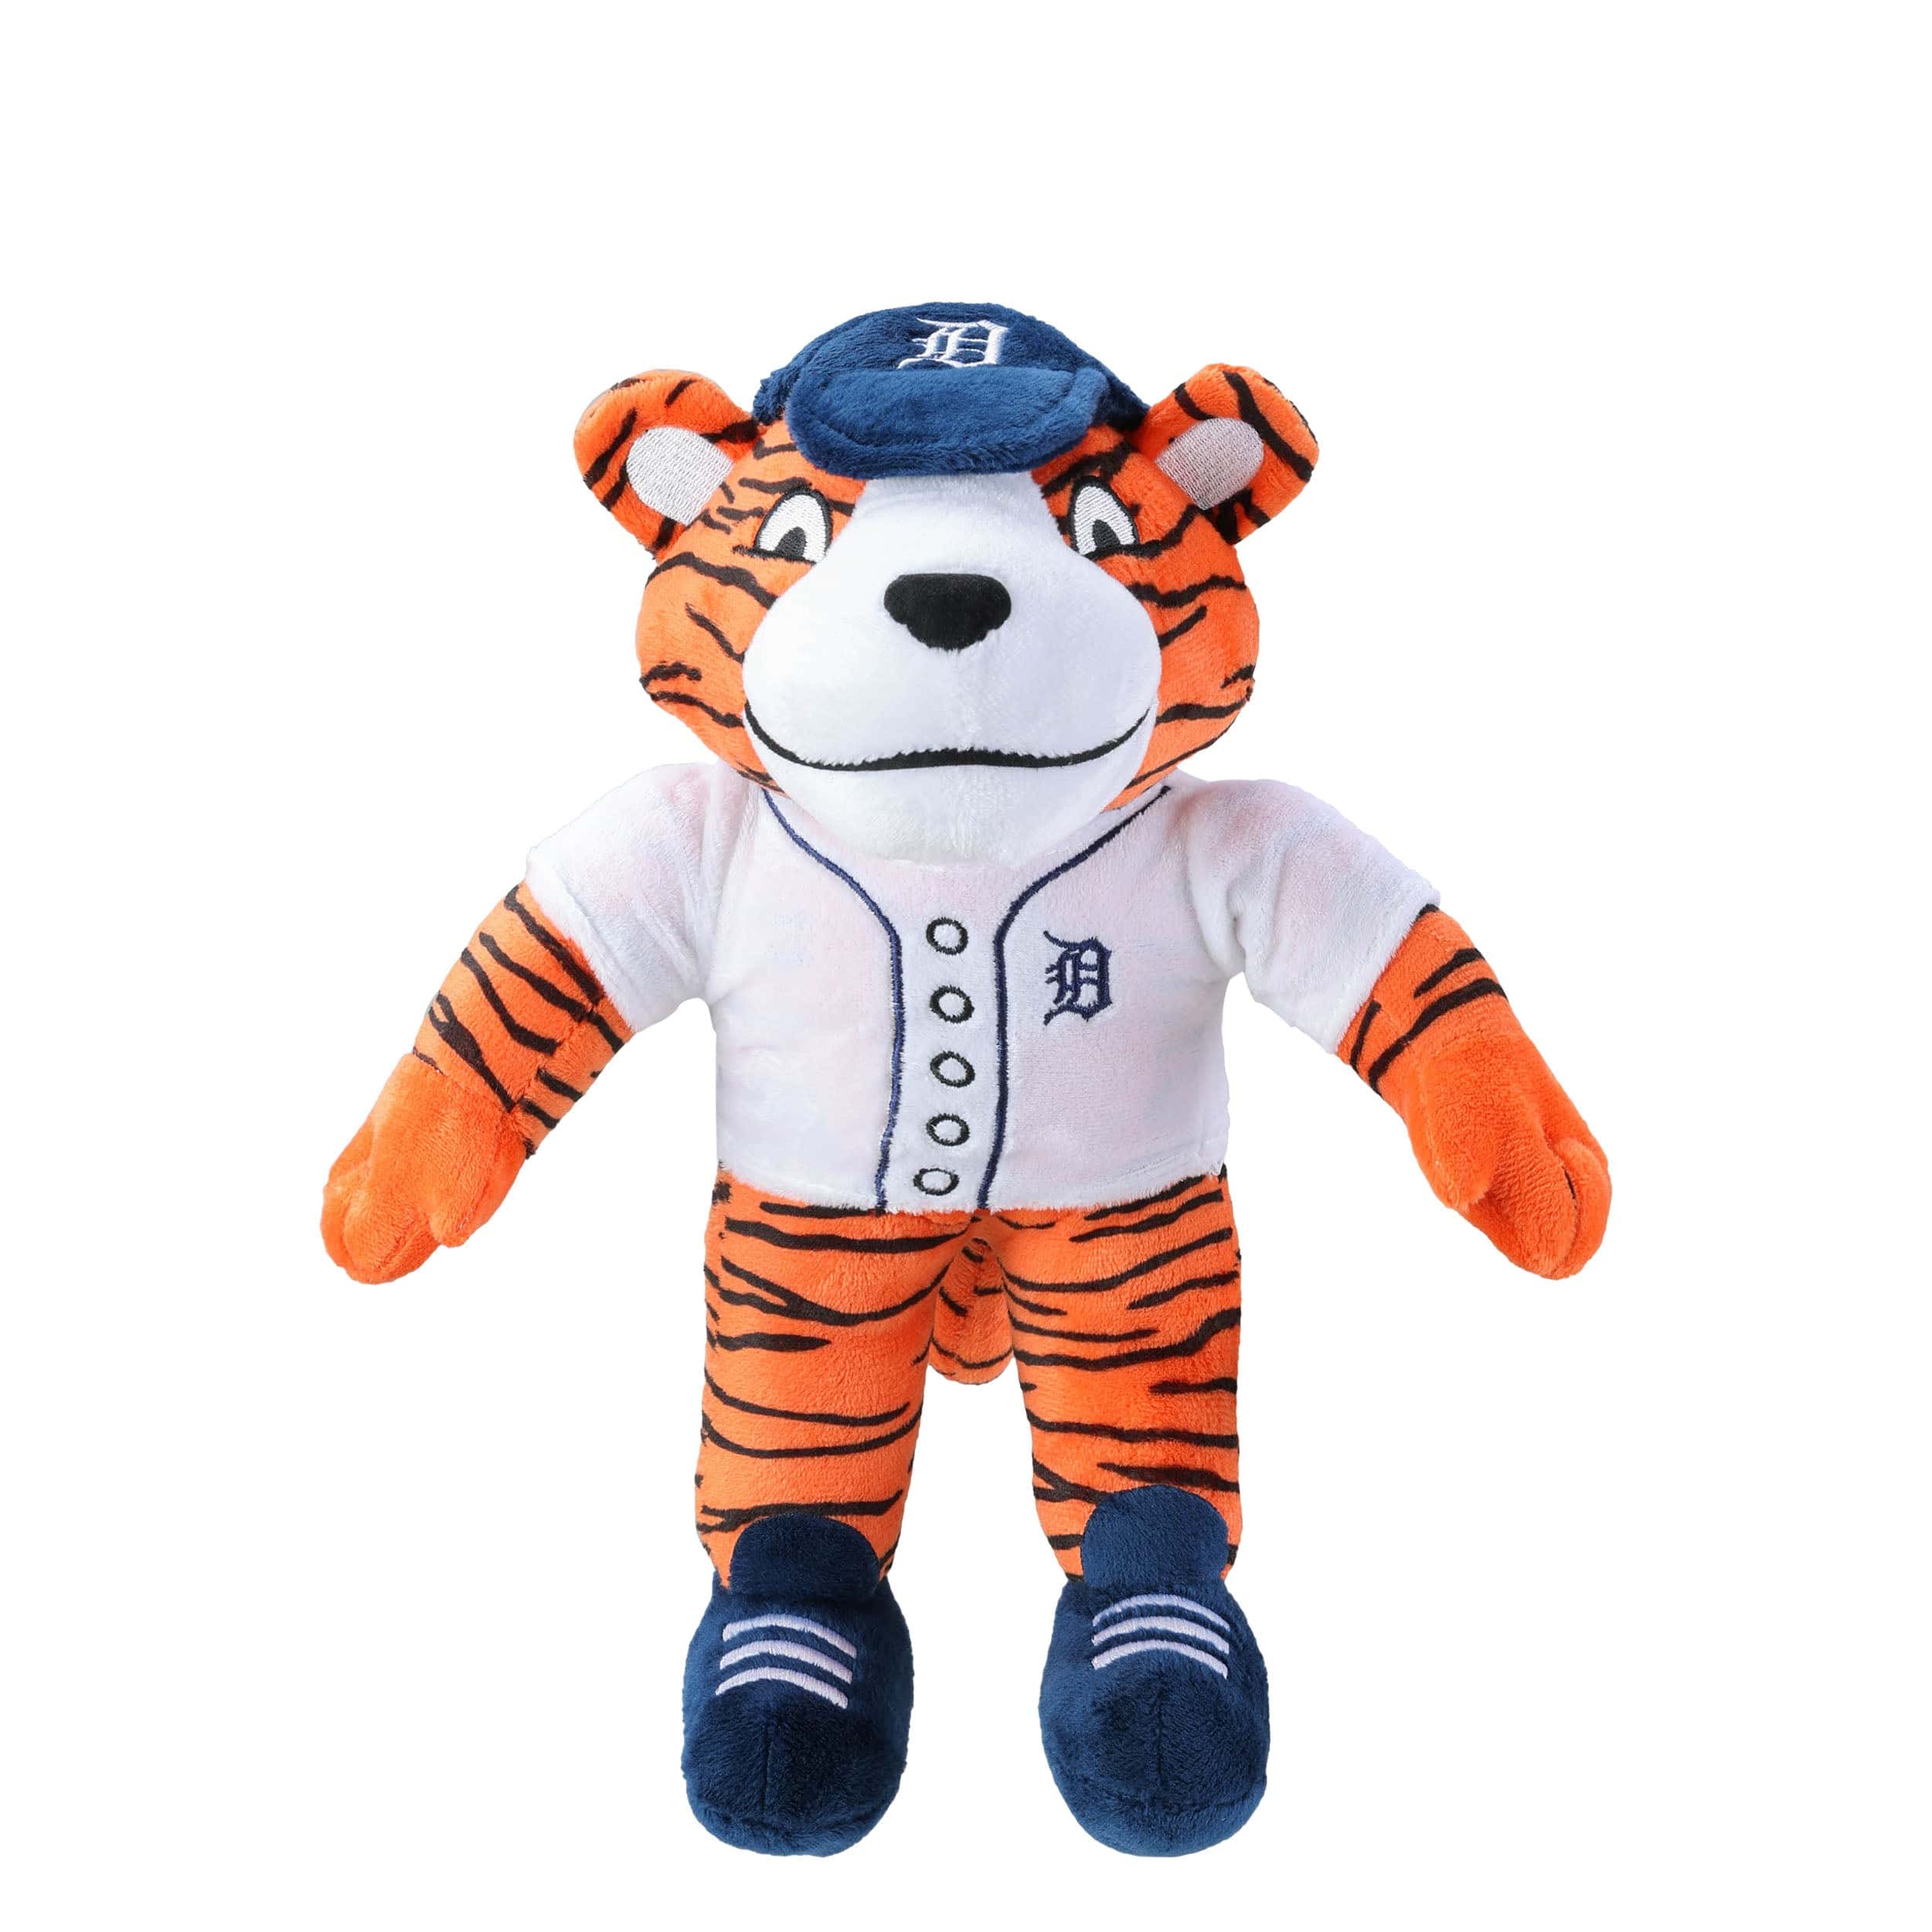 Paws (Detroit Tigers) - Wikipedia